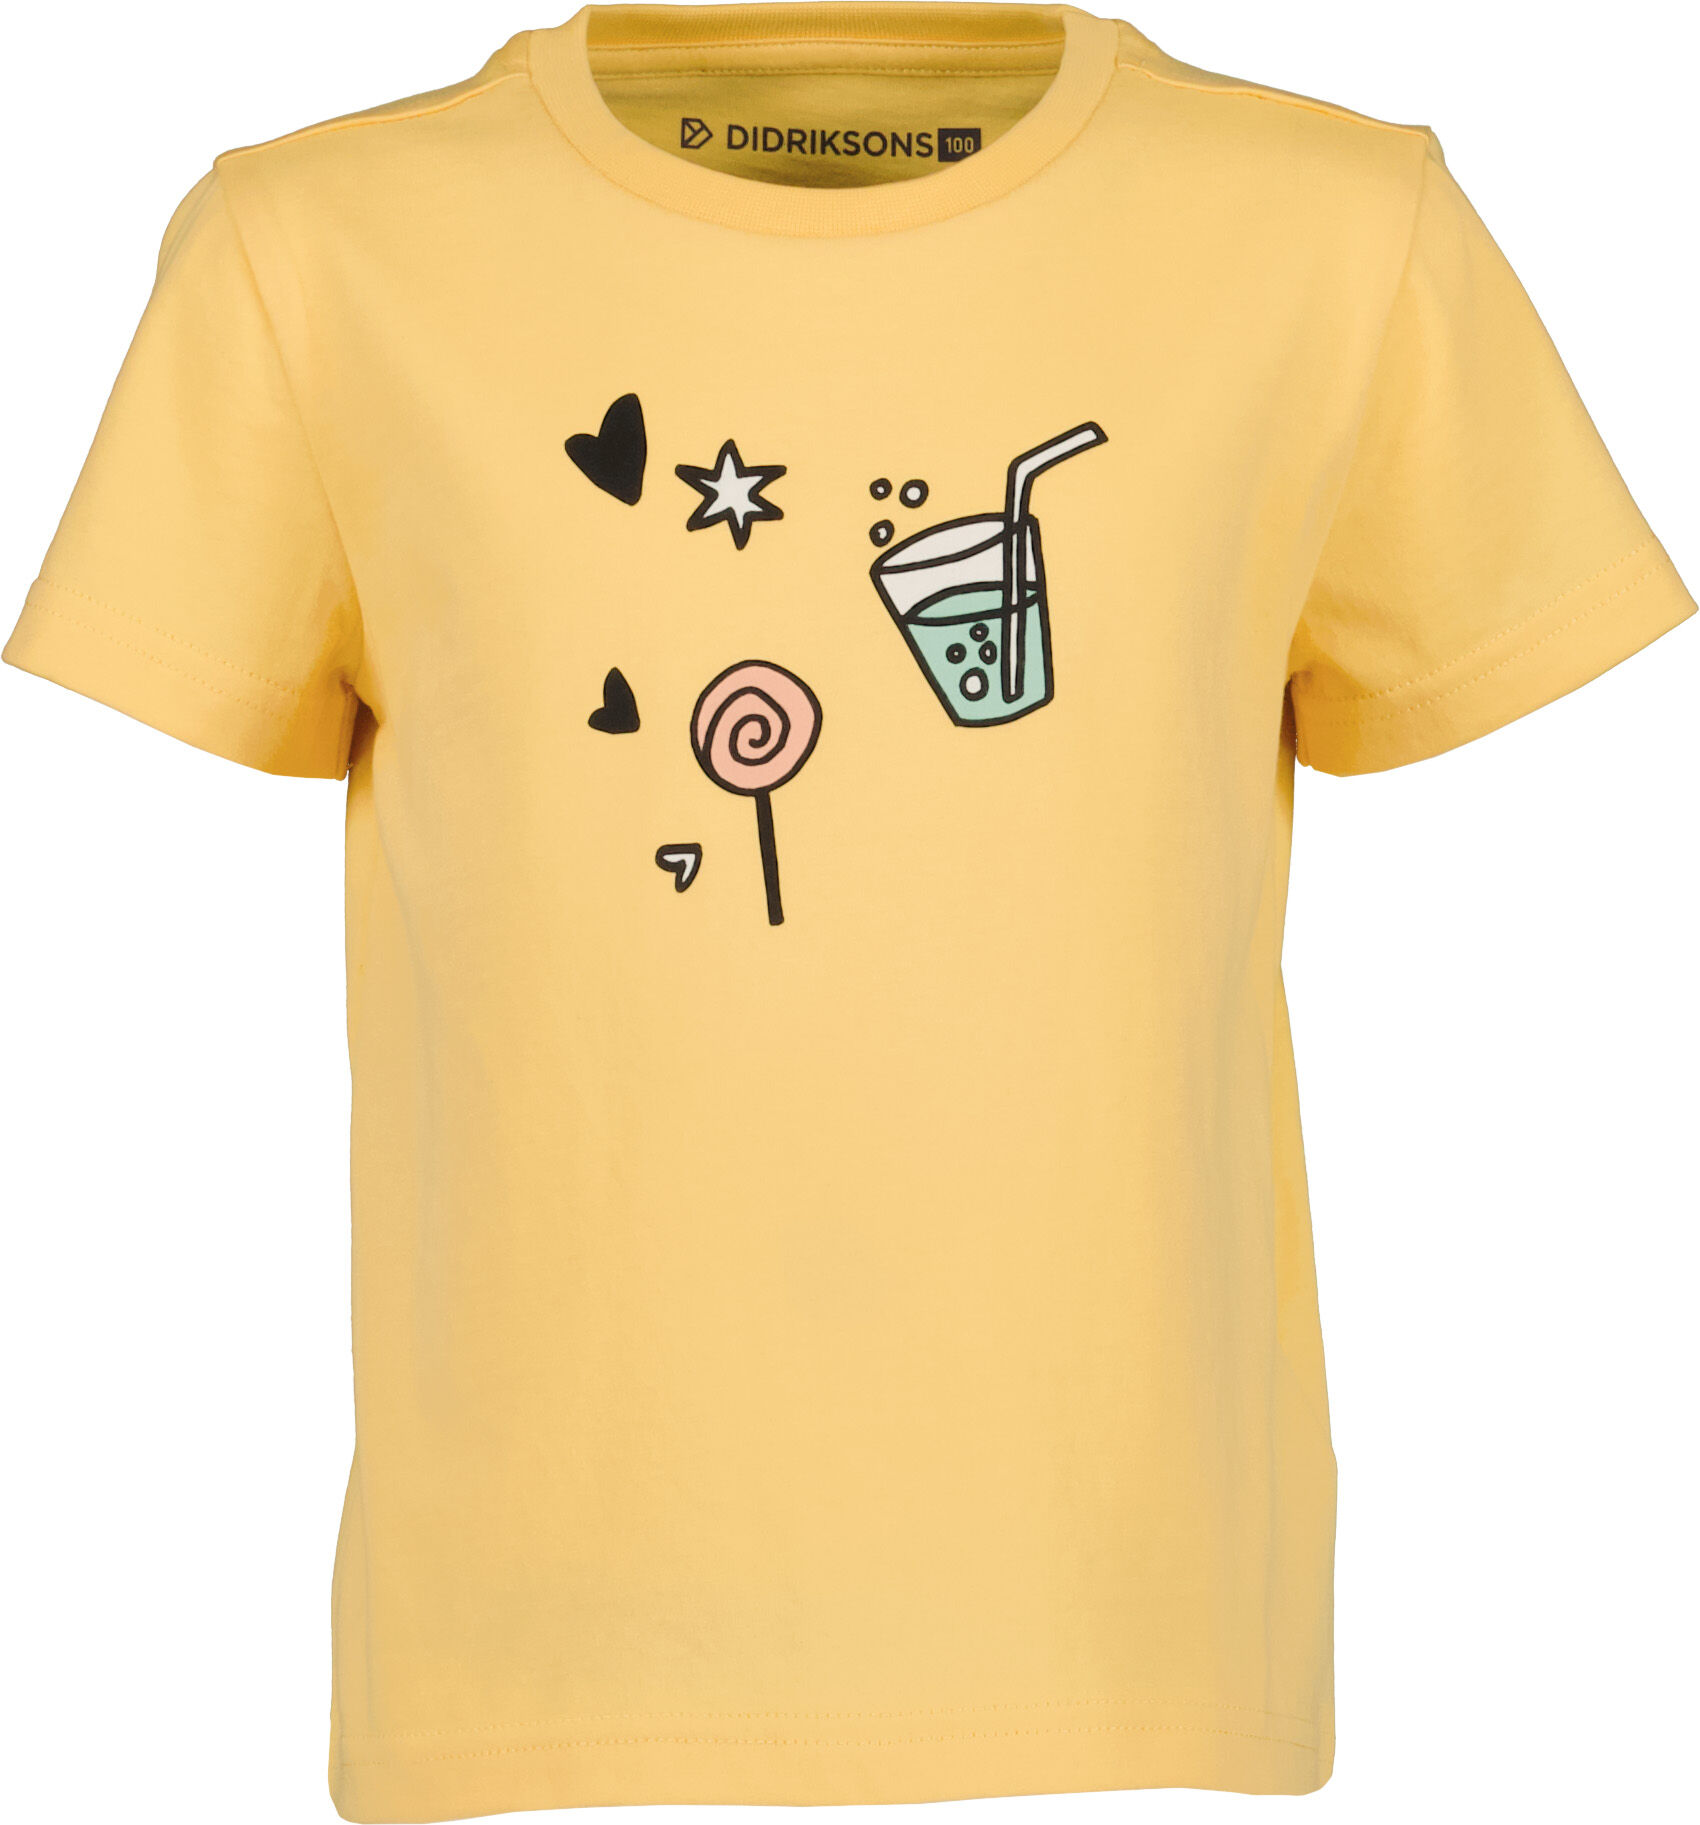 Didriksons Mynta T-shirt Creamy Yellow 140